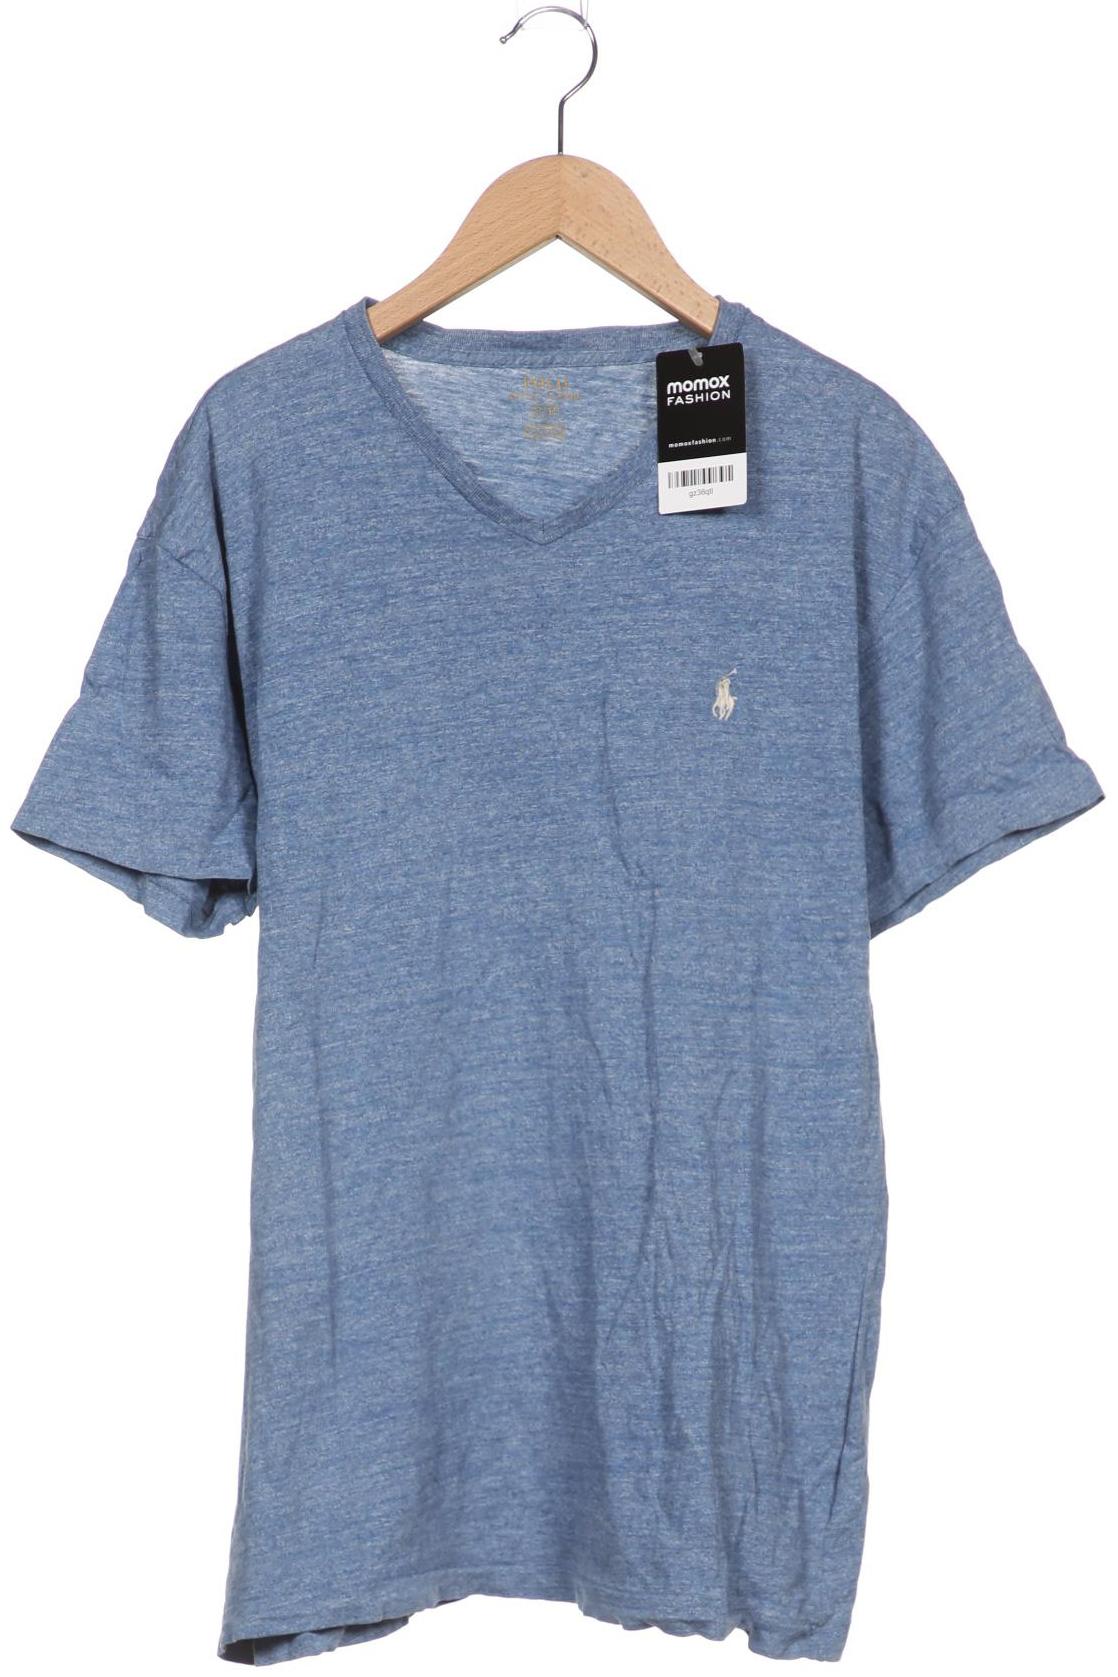 Polo Ralph Lauren Herren T-Shirt, blau, Gr. 46 von Polo Ralph Lauren